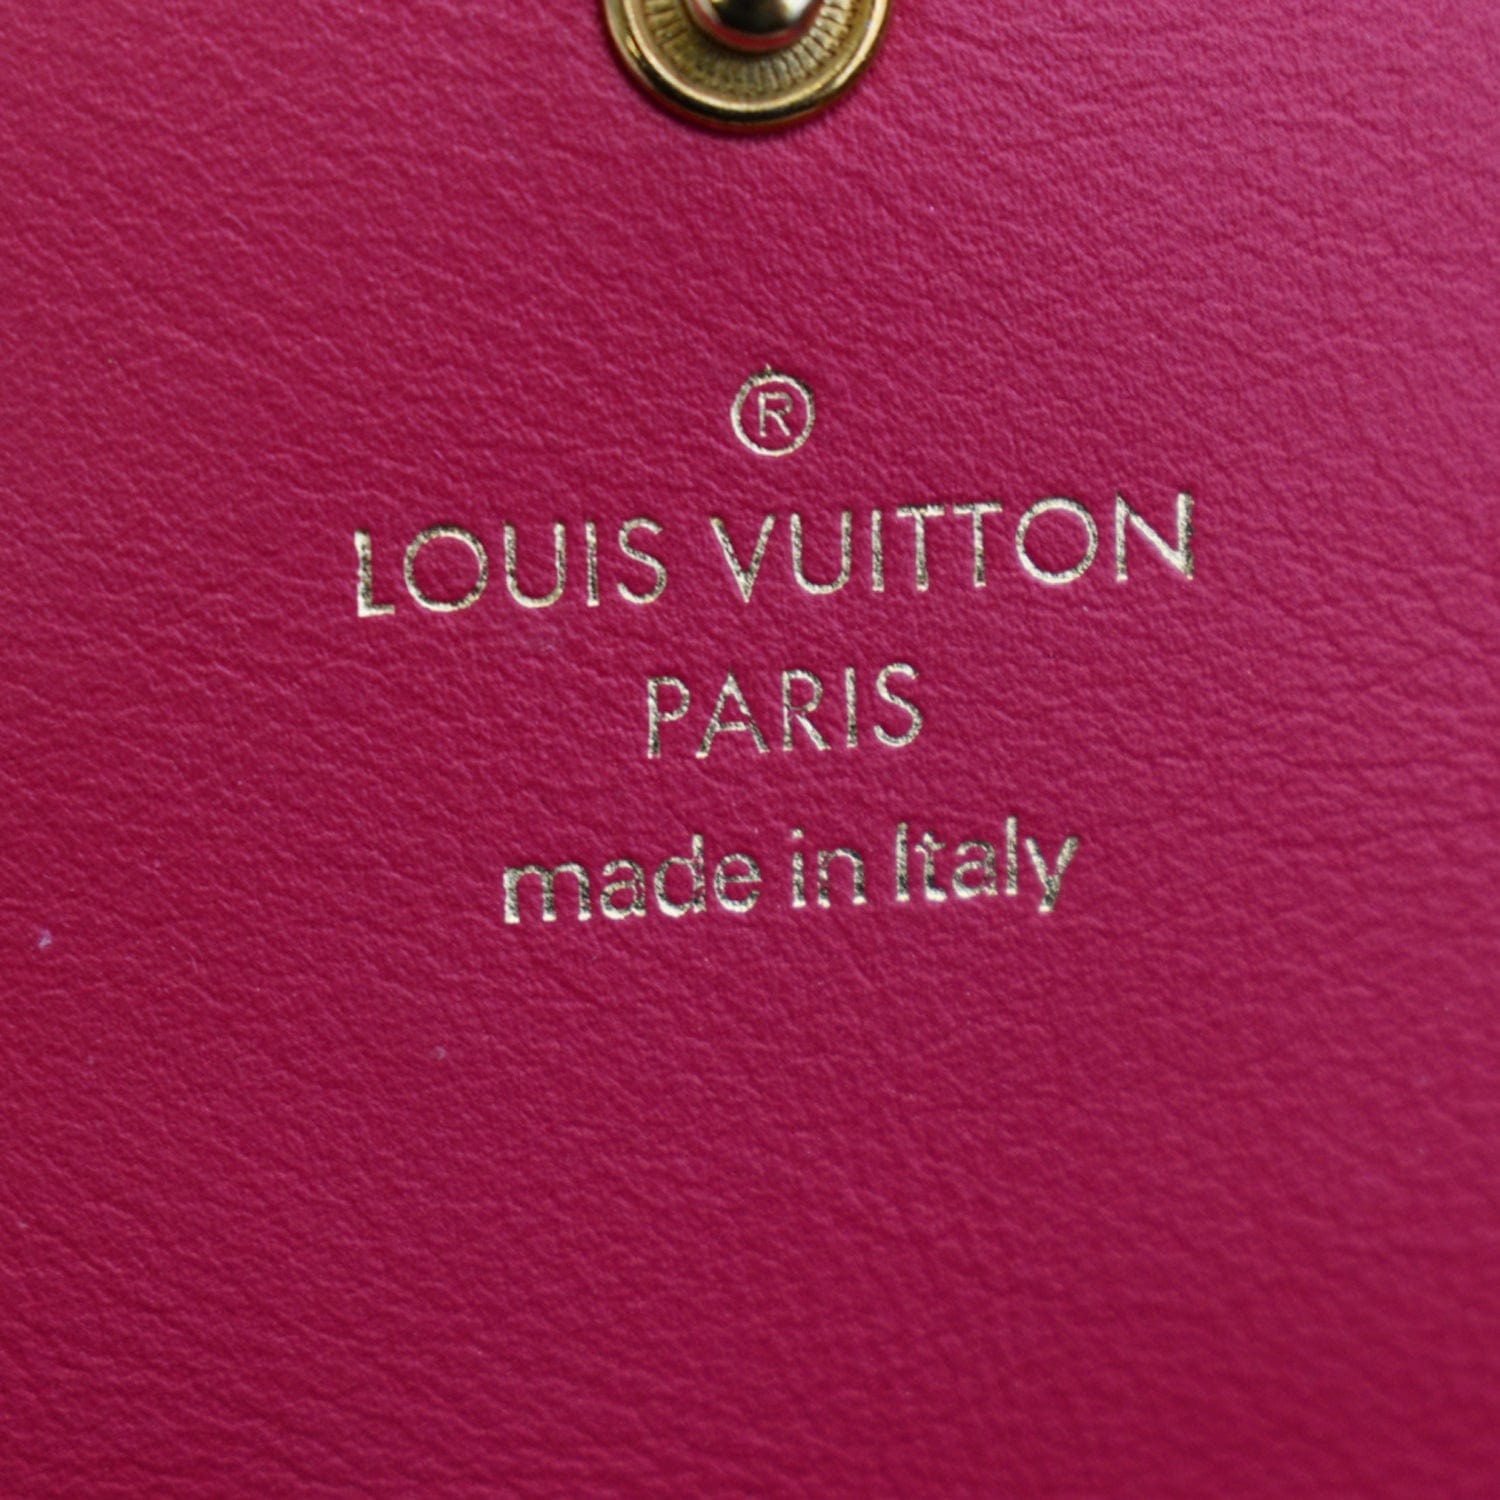 LOUIS VUITTON new wave rouge bifold long wallet